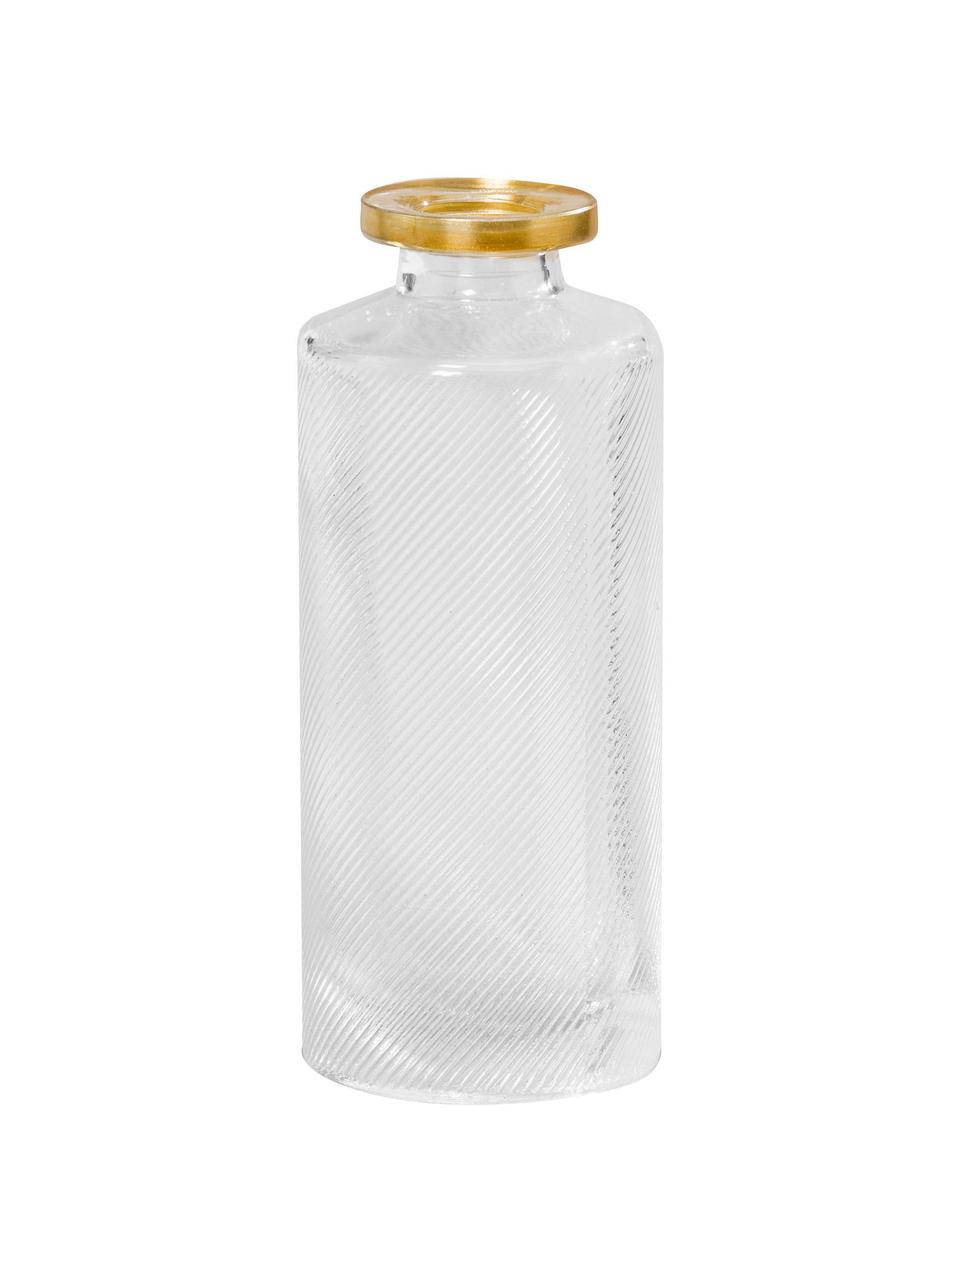 Set de jarrones pequeños de vidrio Adore, 3 uds., Transparente, dorado, Ø 5 x Al 13 cm